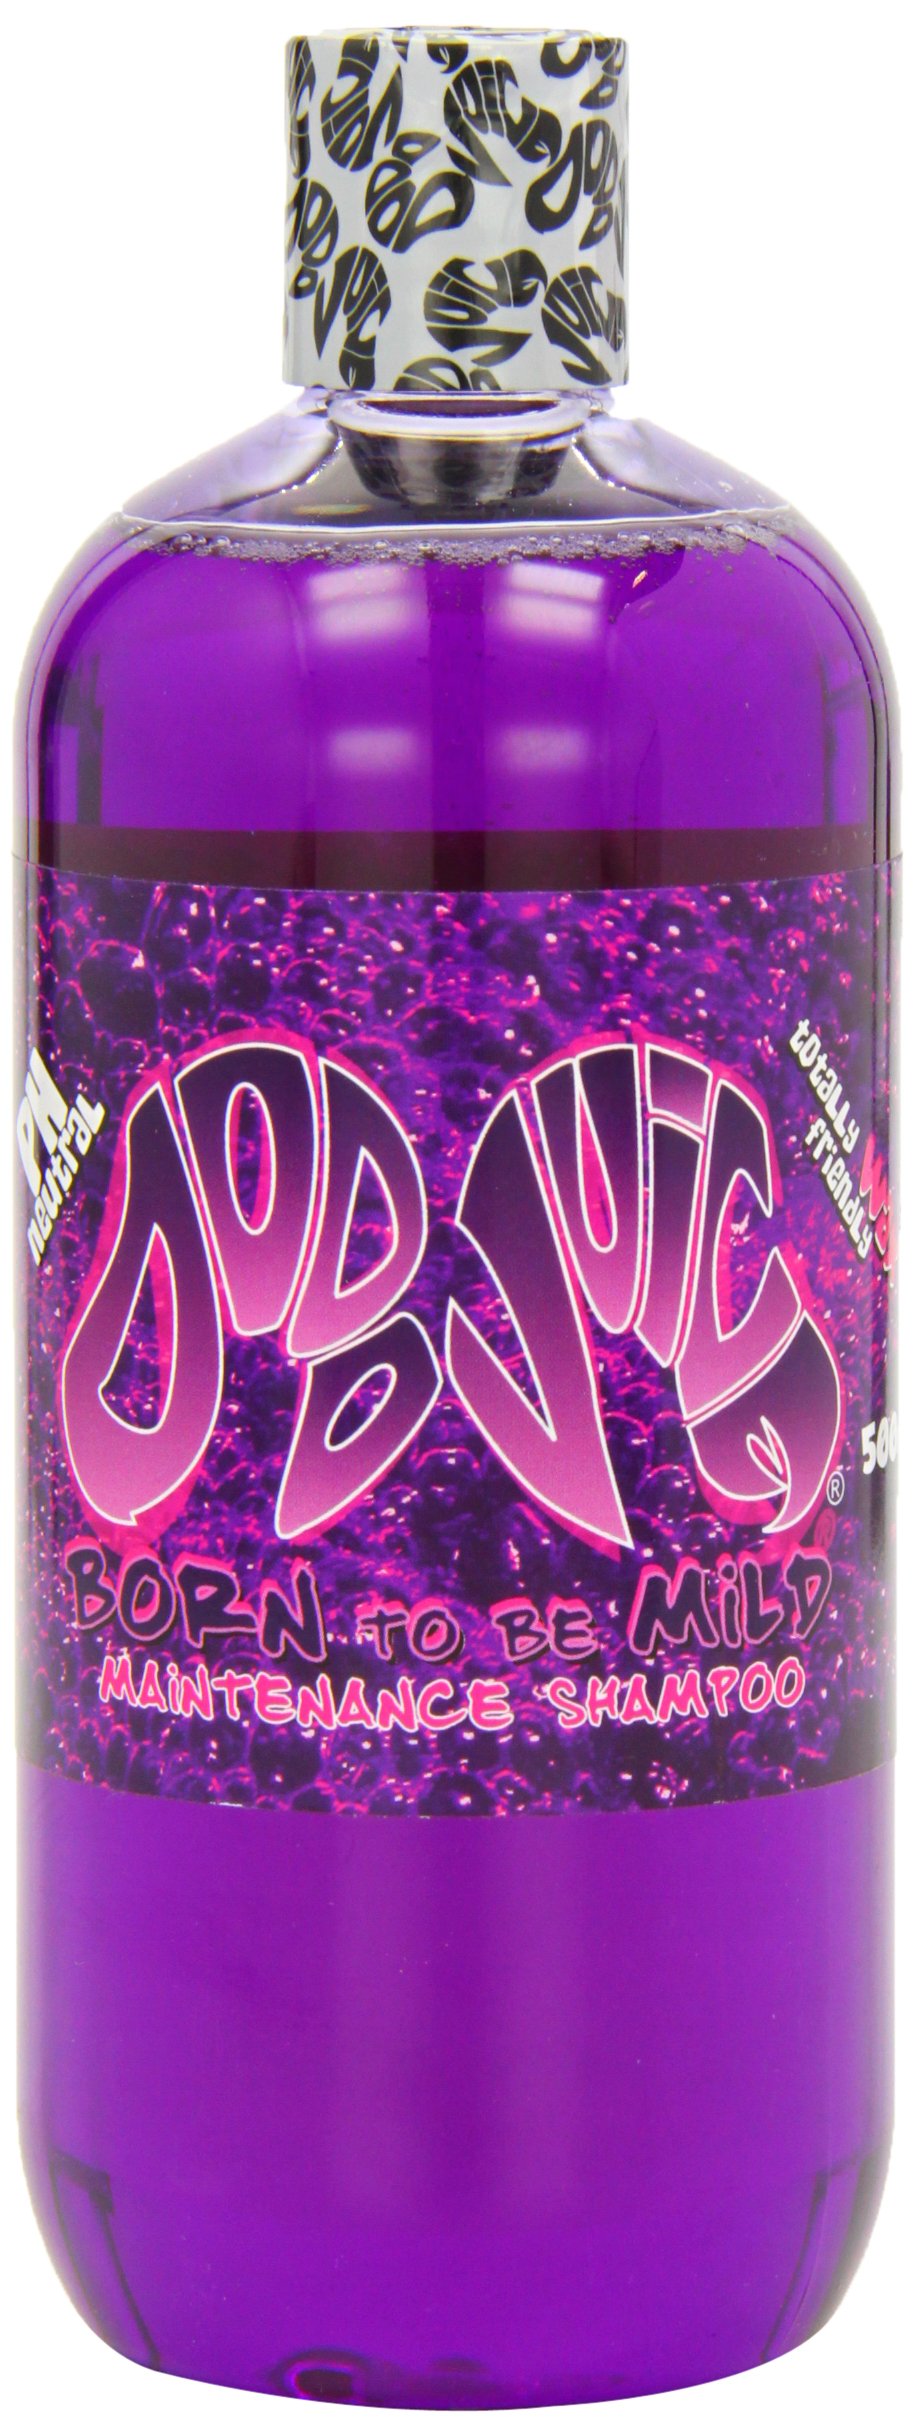 Dodo Juice Born to be Mild Shampoo - 500ml von Dodo Juice